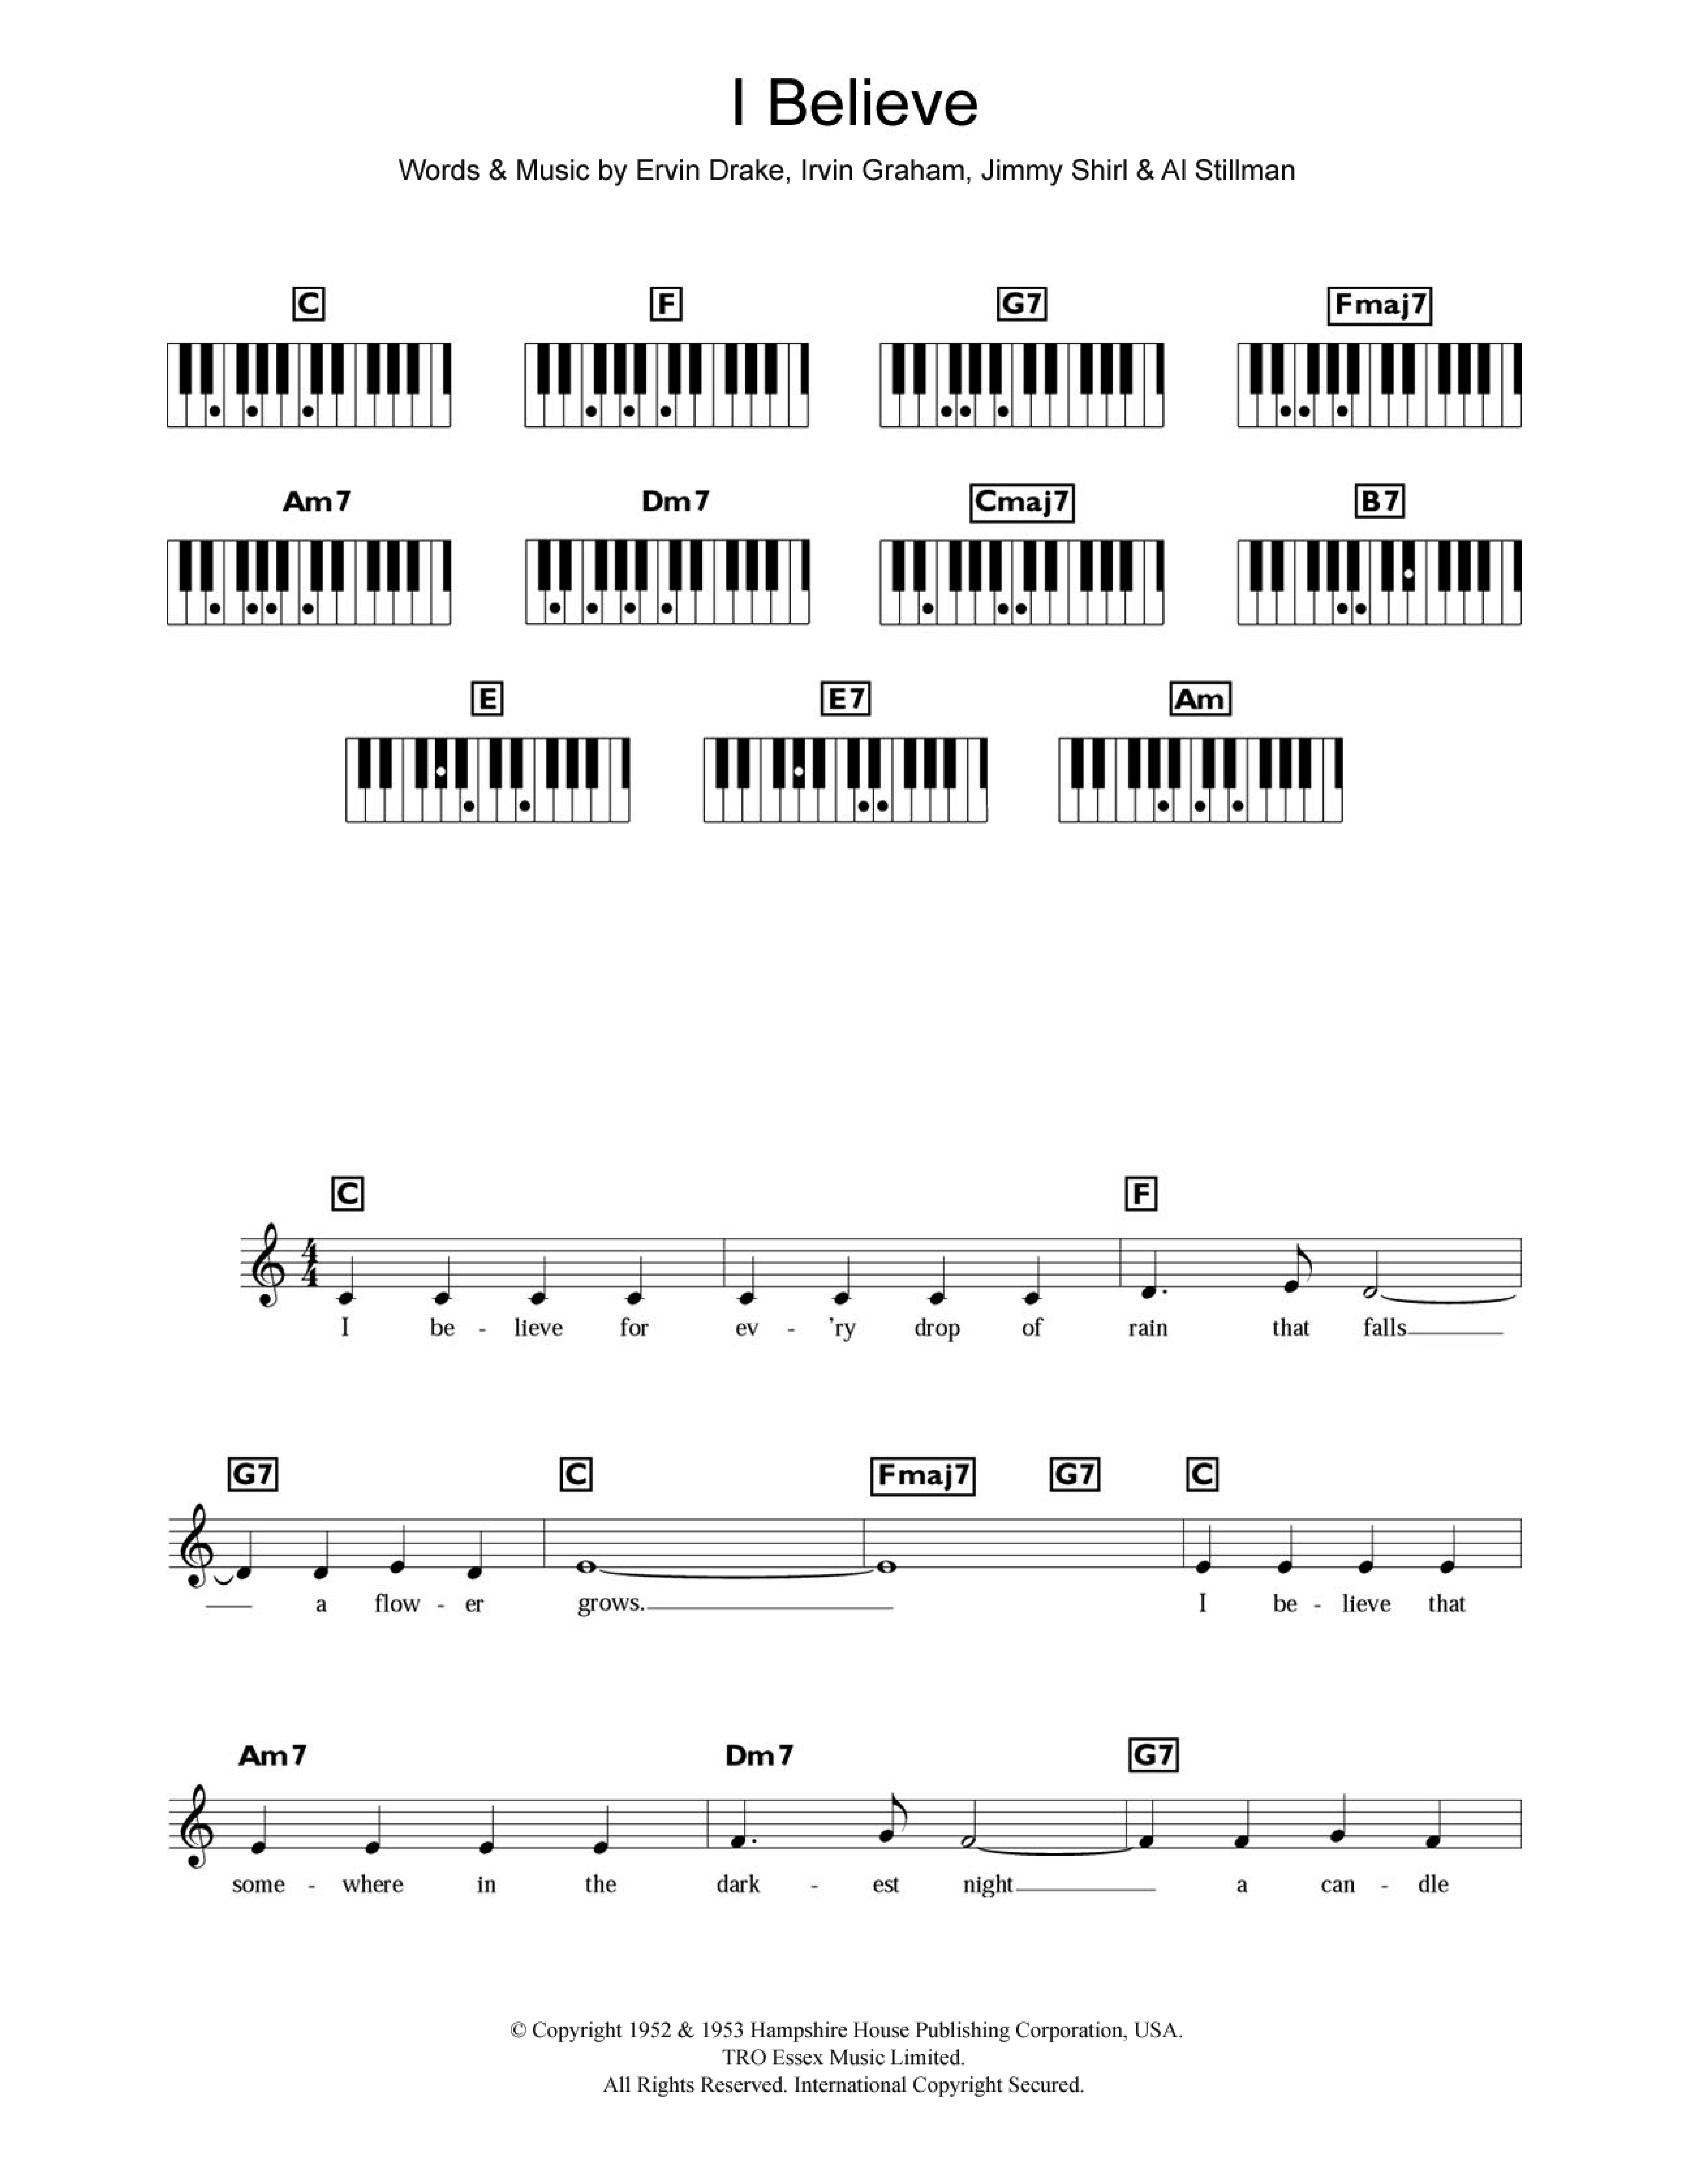 Bon Jovi I Believe Sheet Music Notes & Chords for Keyboard - Download or Print PDF